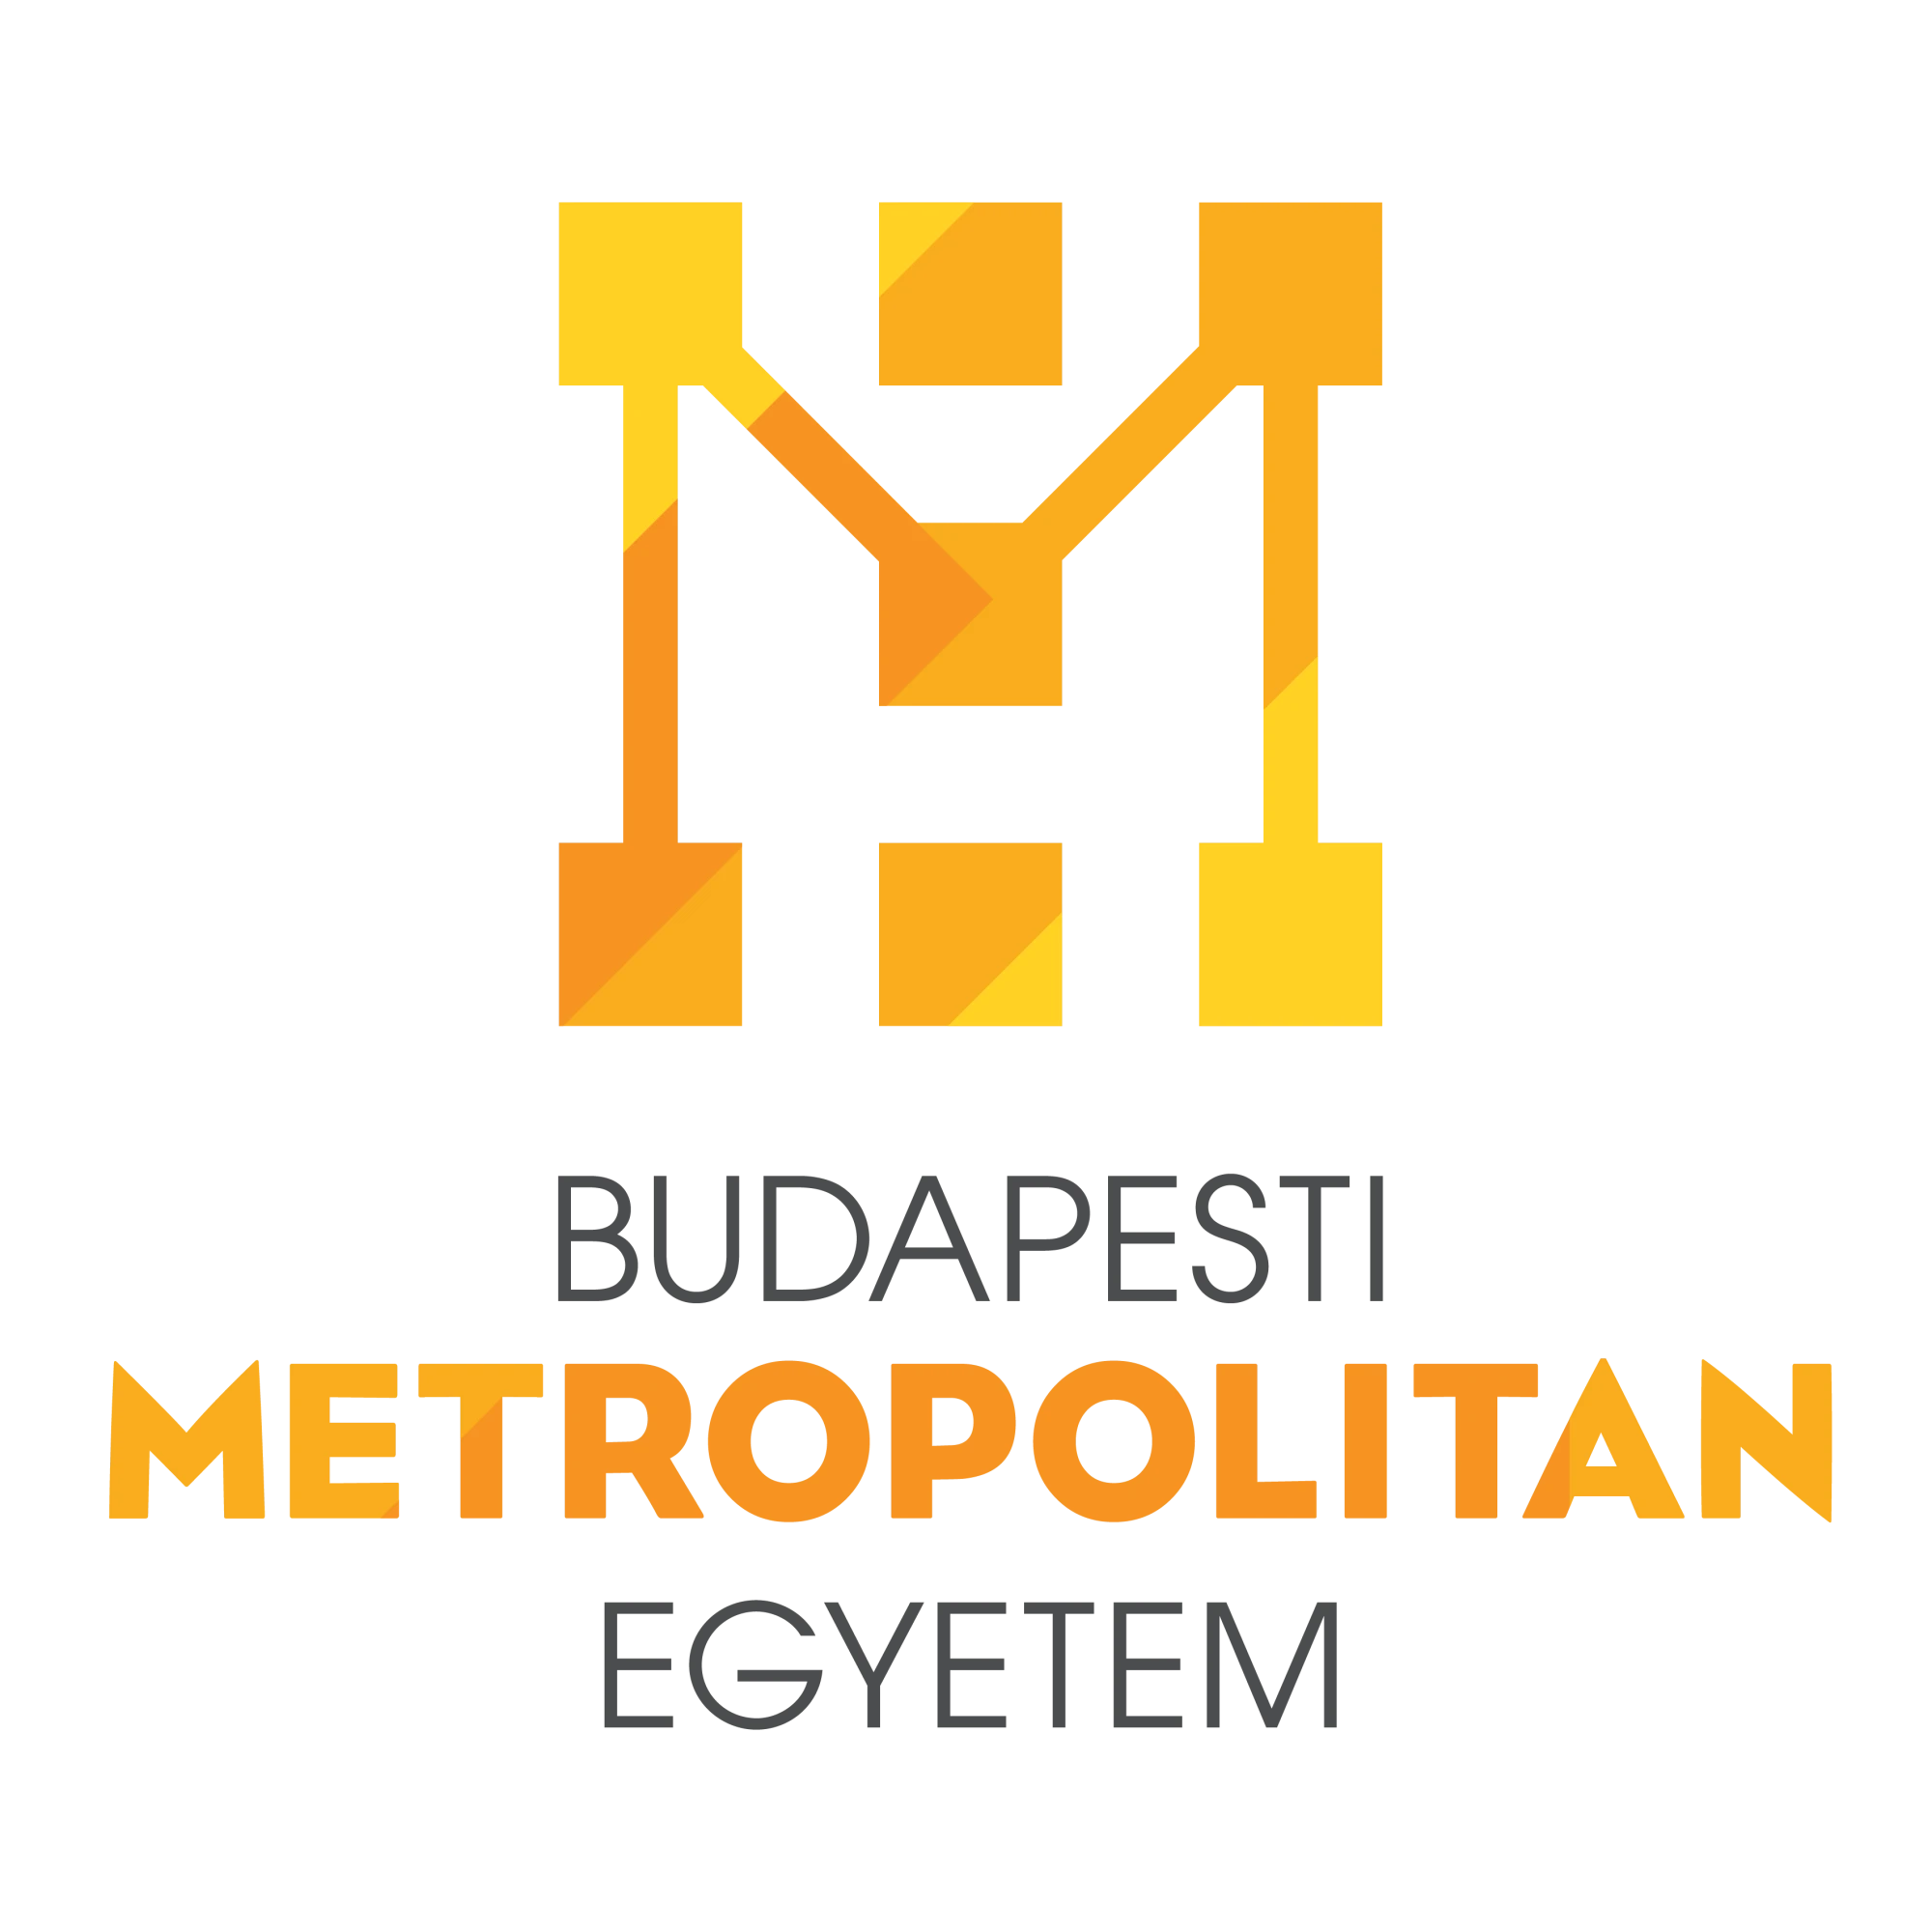 Budapesti Metropolitan Egyetem